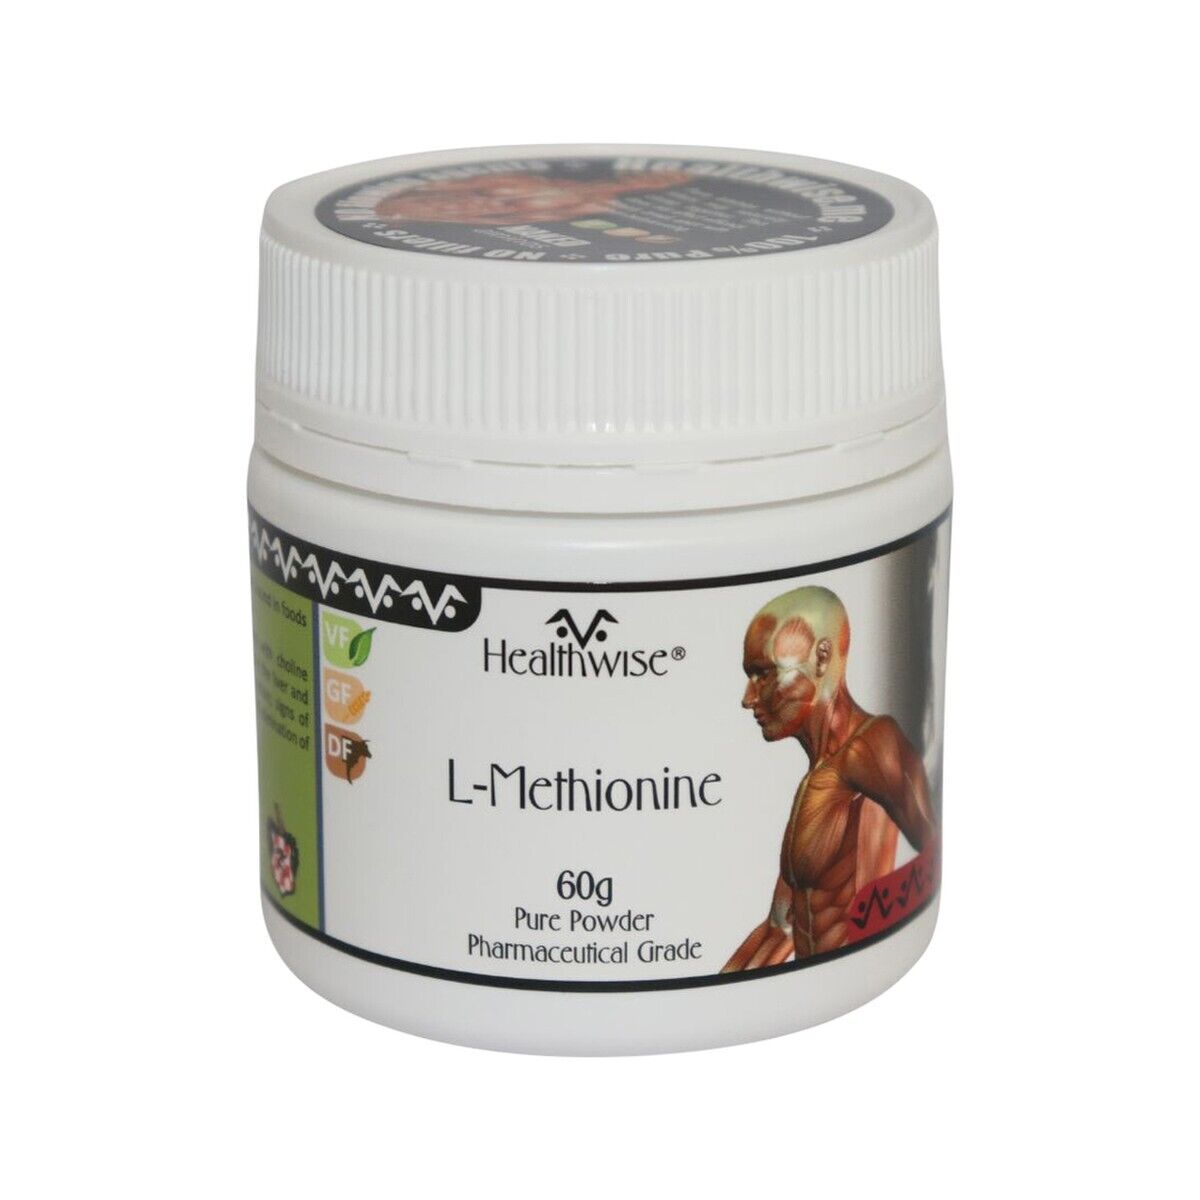 Healthwise L-Methionine 60g Powder